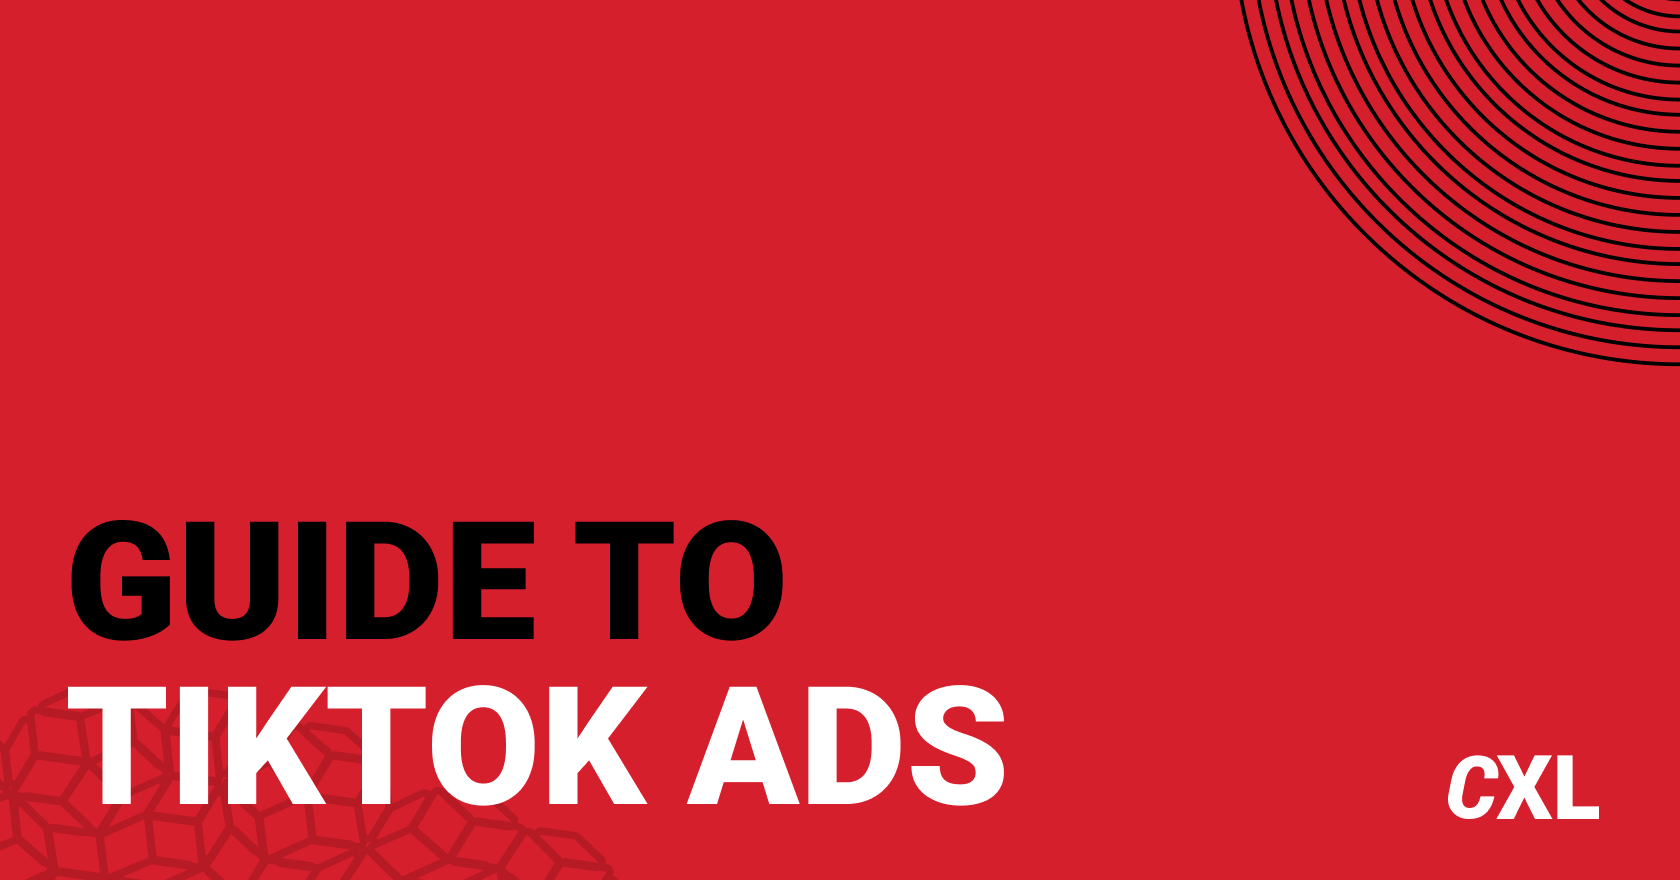 How to Get Verified on TikTok: The 2022 Guide - inzpire.me Blog